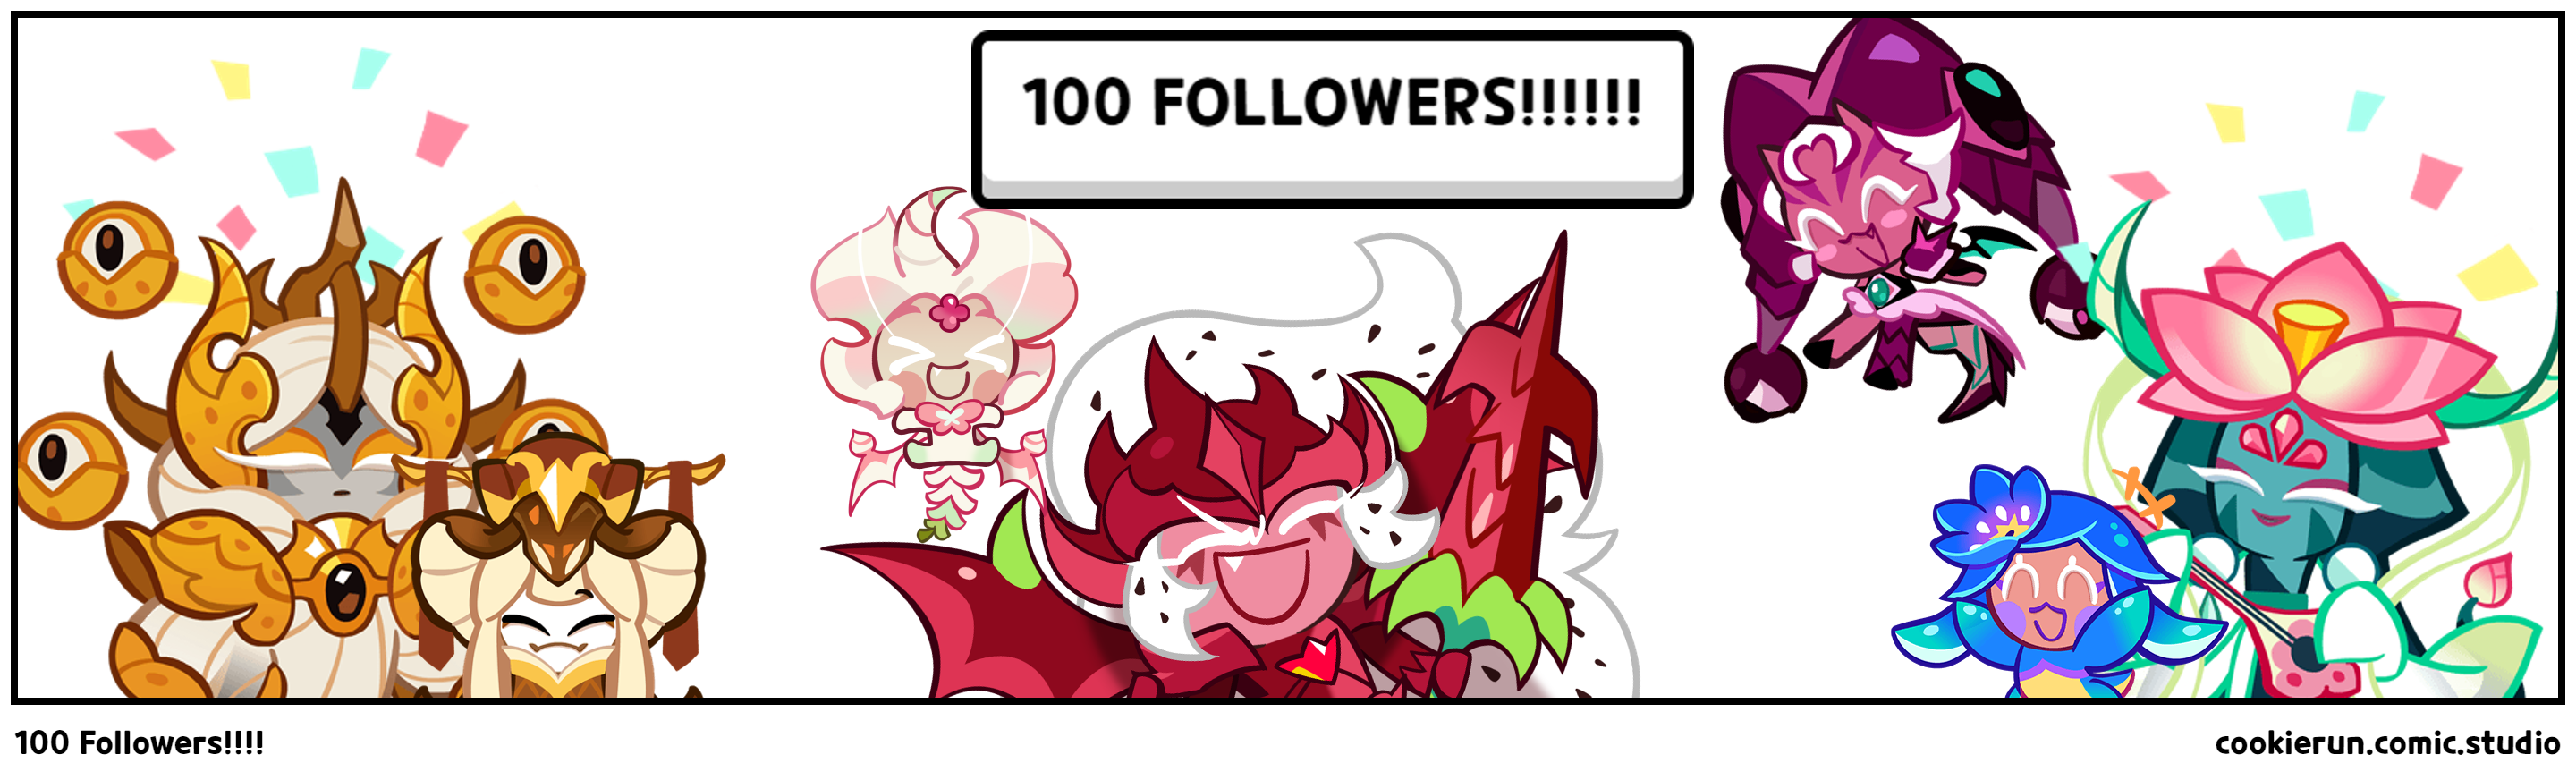 100 Followers!!!!